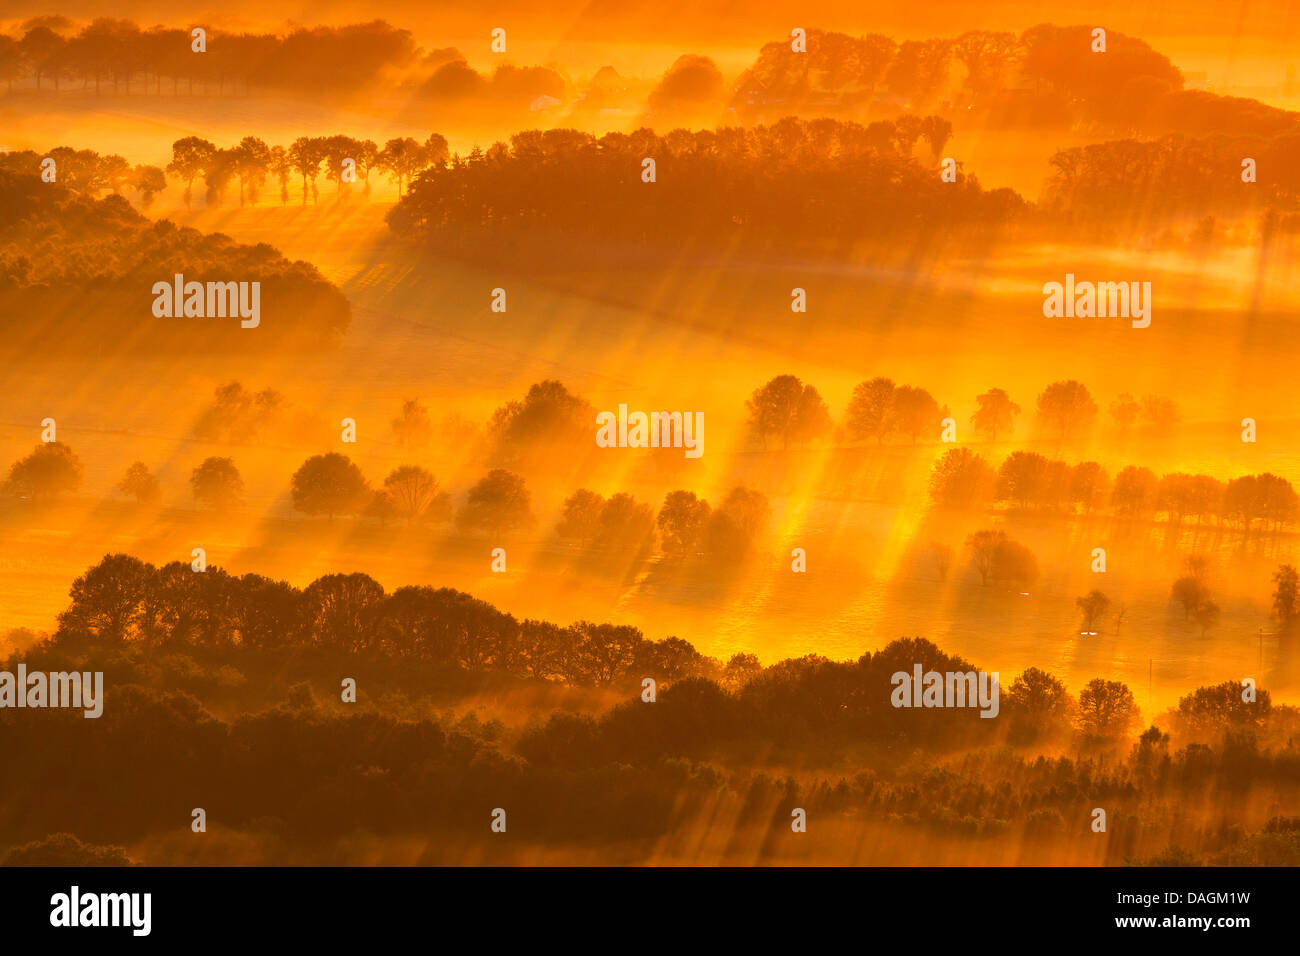 Brugs Ommeland all'alba nella nebbia, Belgio Foto Stock